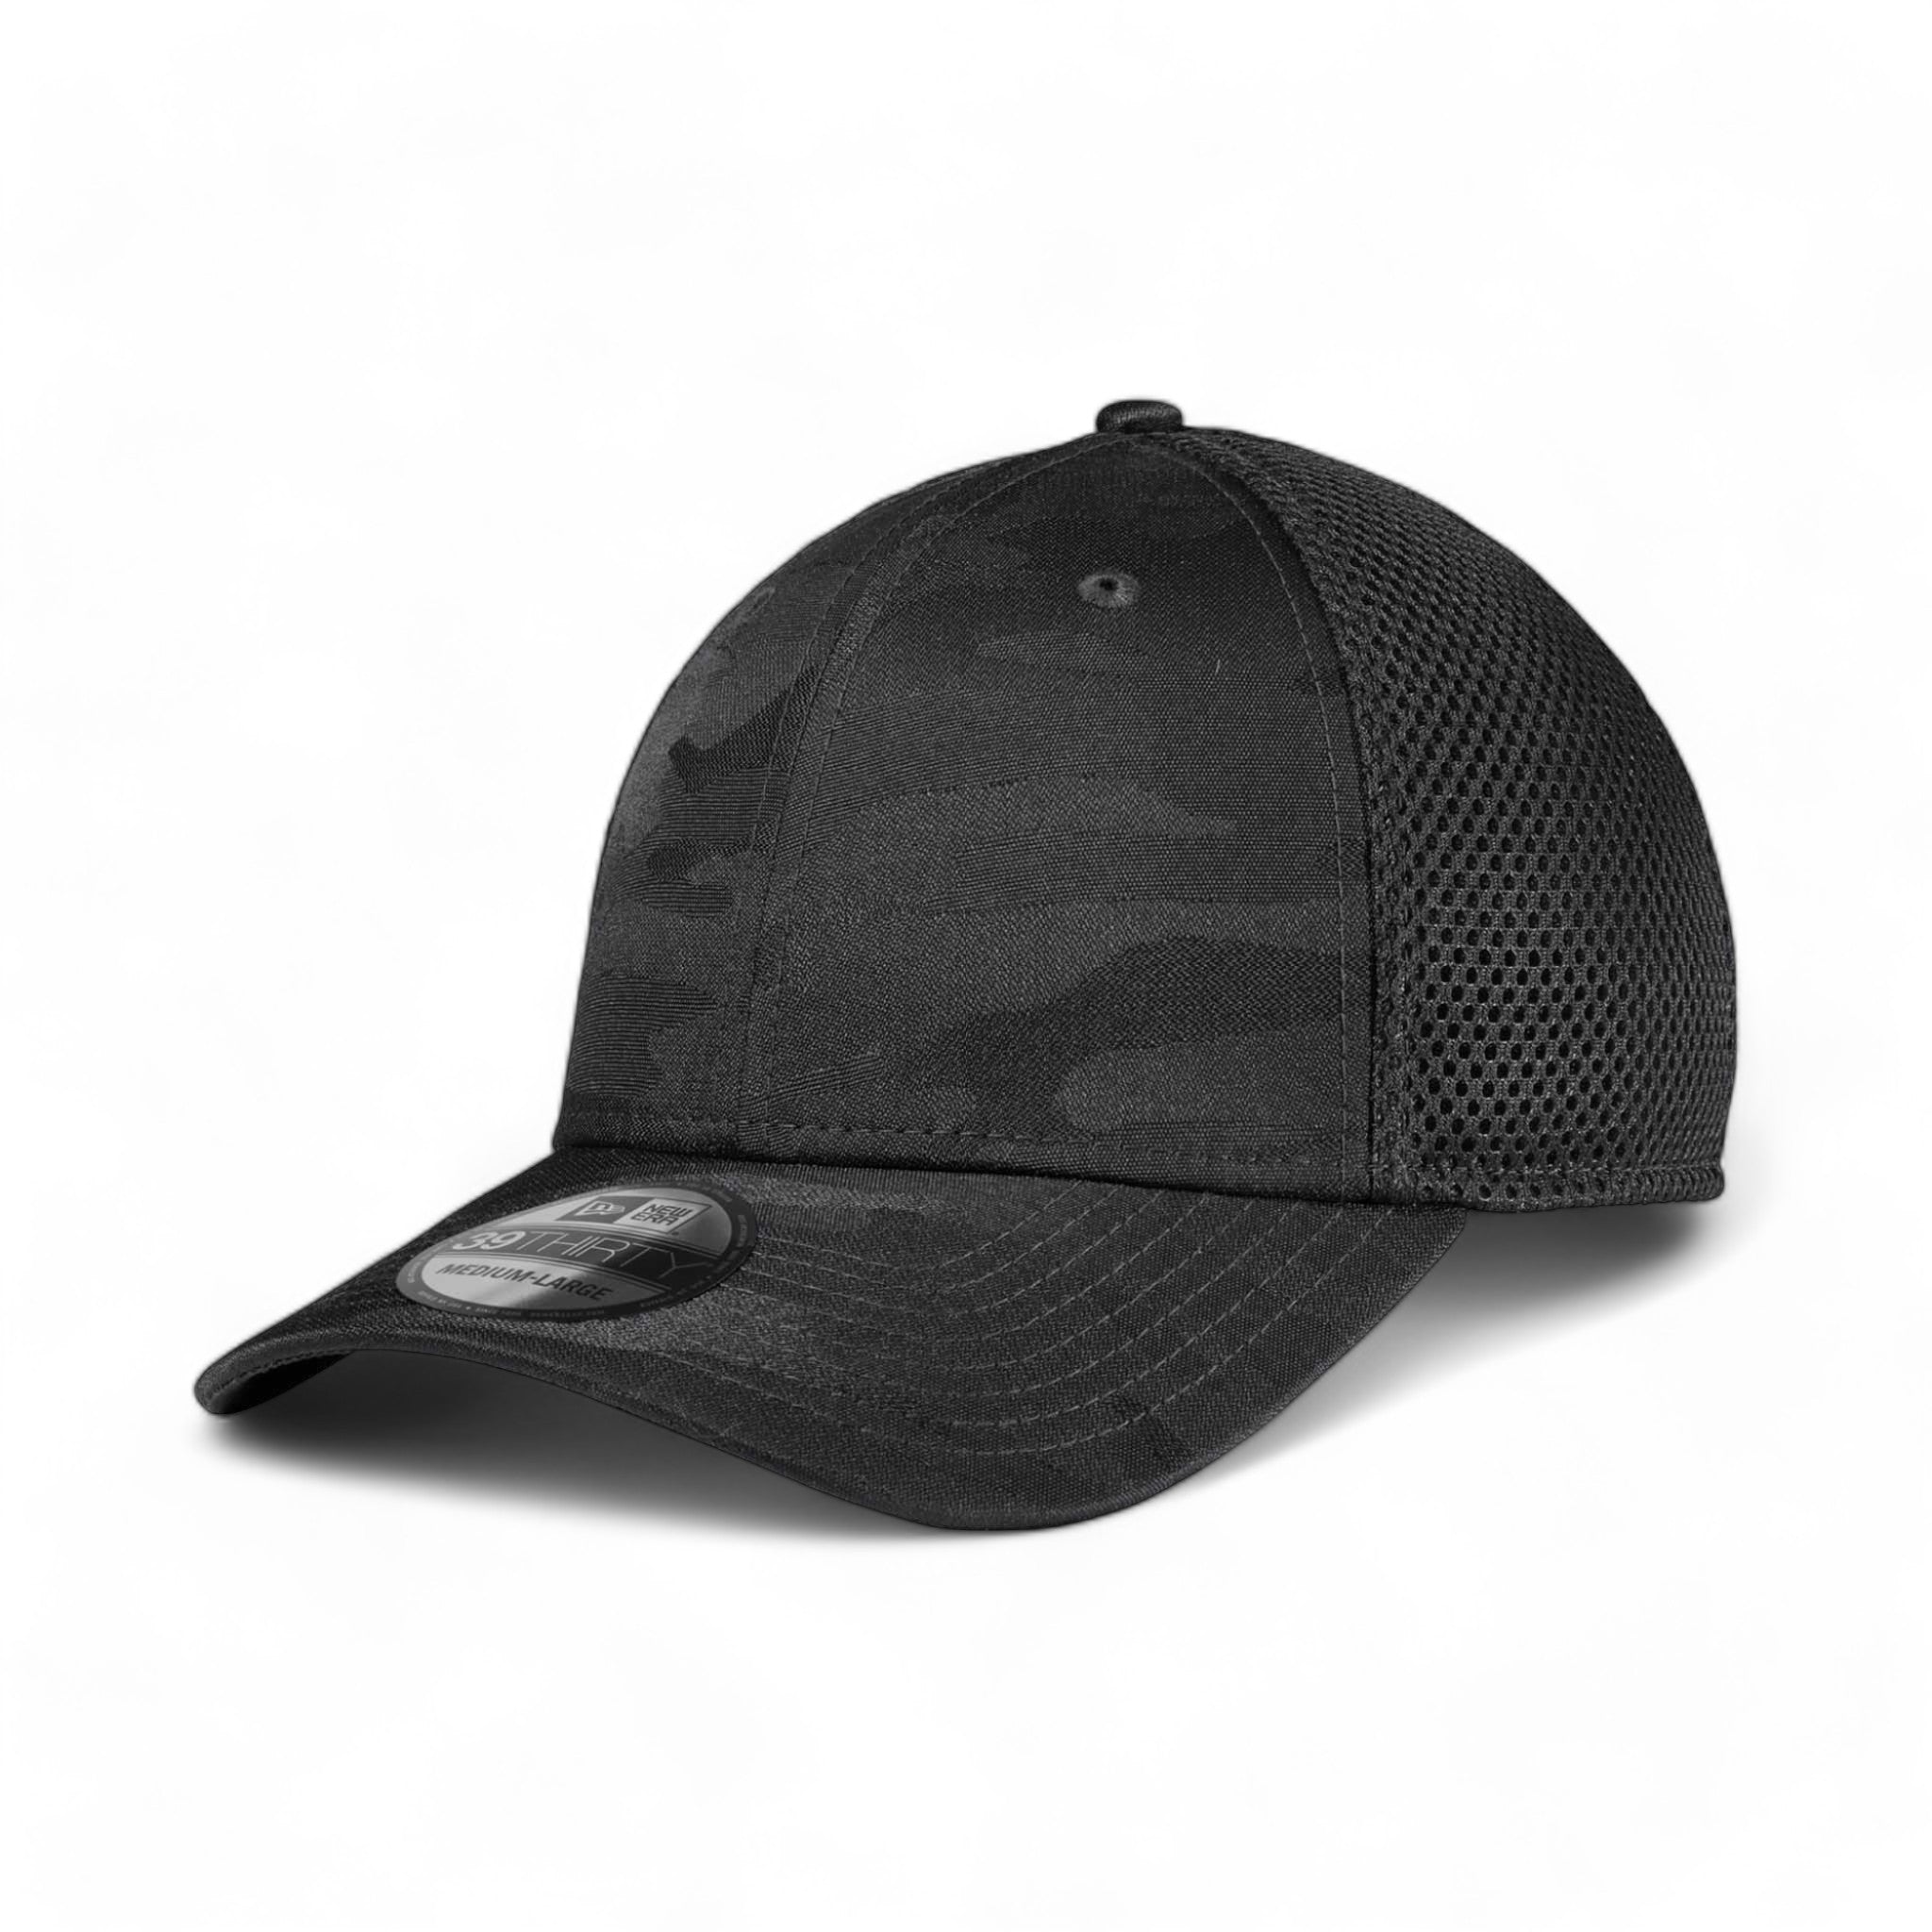 Side view of New Era NE1091 custom hat in black camo